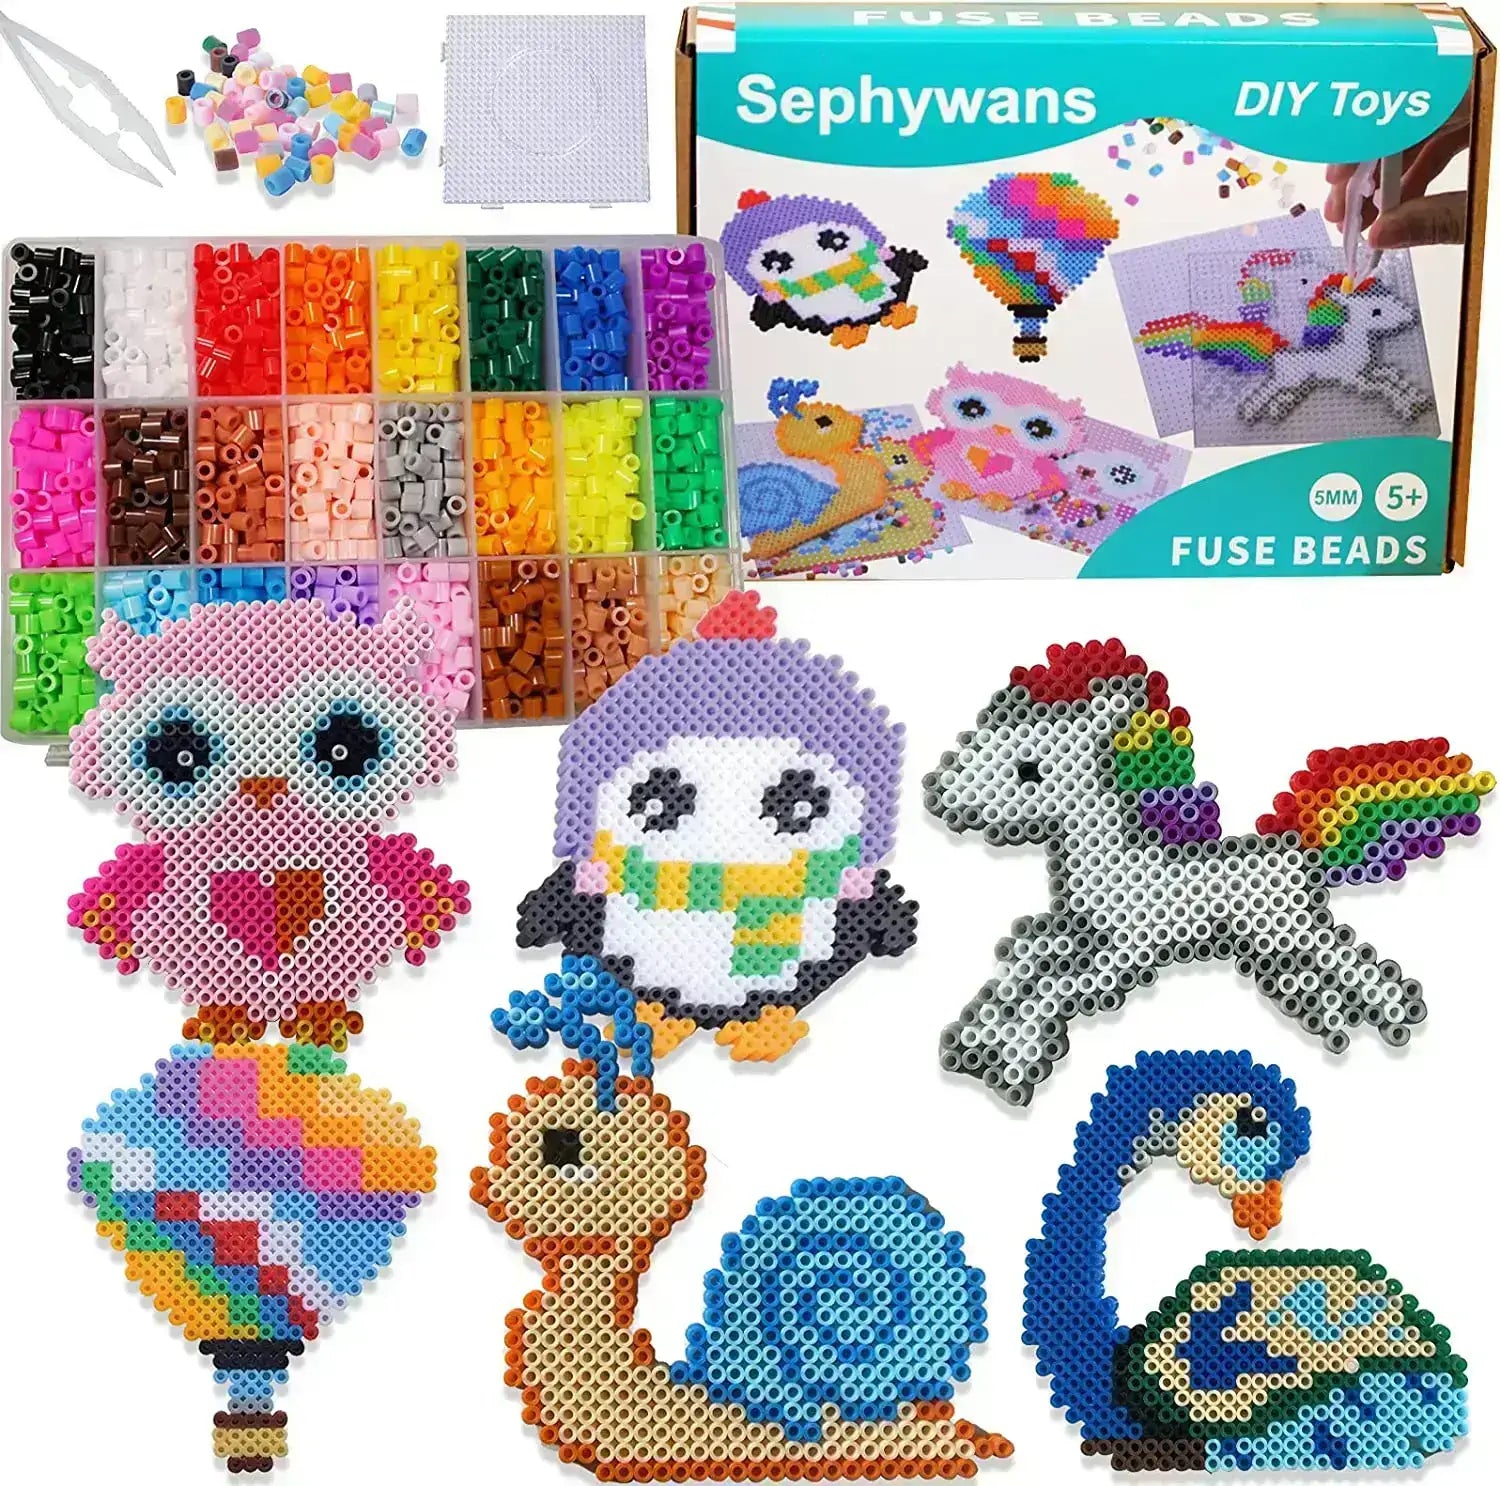 Sephywans Fuse Beads Kit, 4800Pcs 5mm 24 Colors Iron Beads Set for